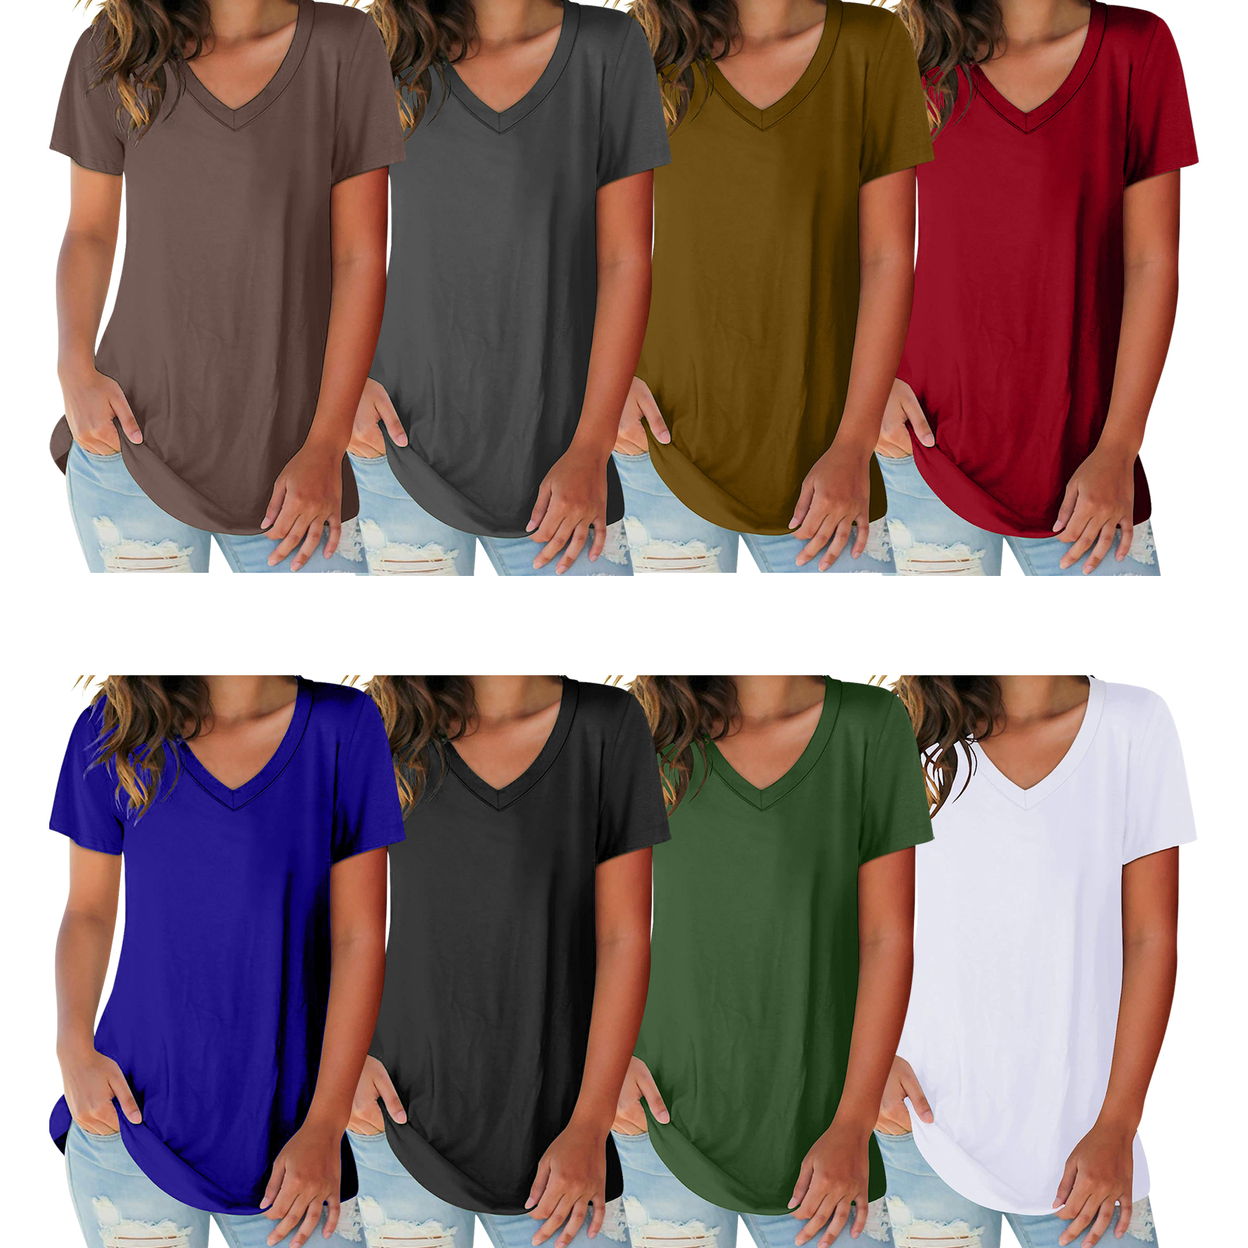 2-Pack: Women's Ultra Soft Smooth Cotton Blend Basic V-Neck Short Sleeve Shirts - Black & Green, X-large